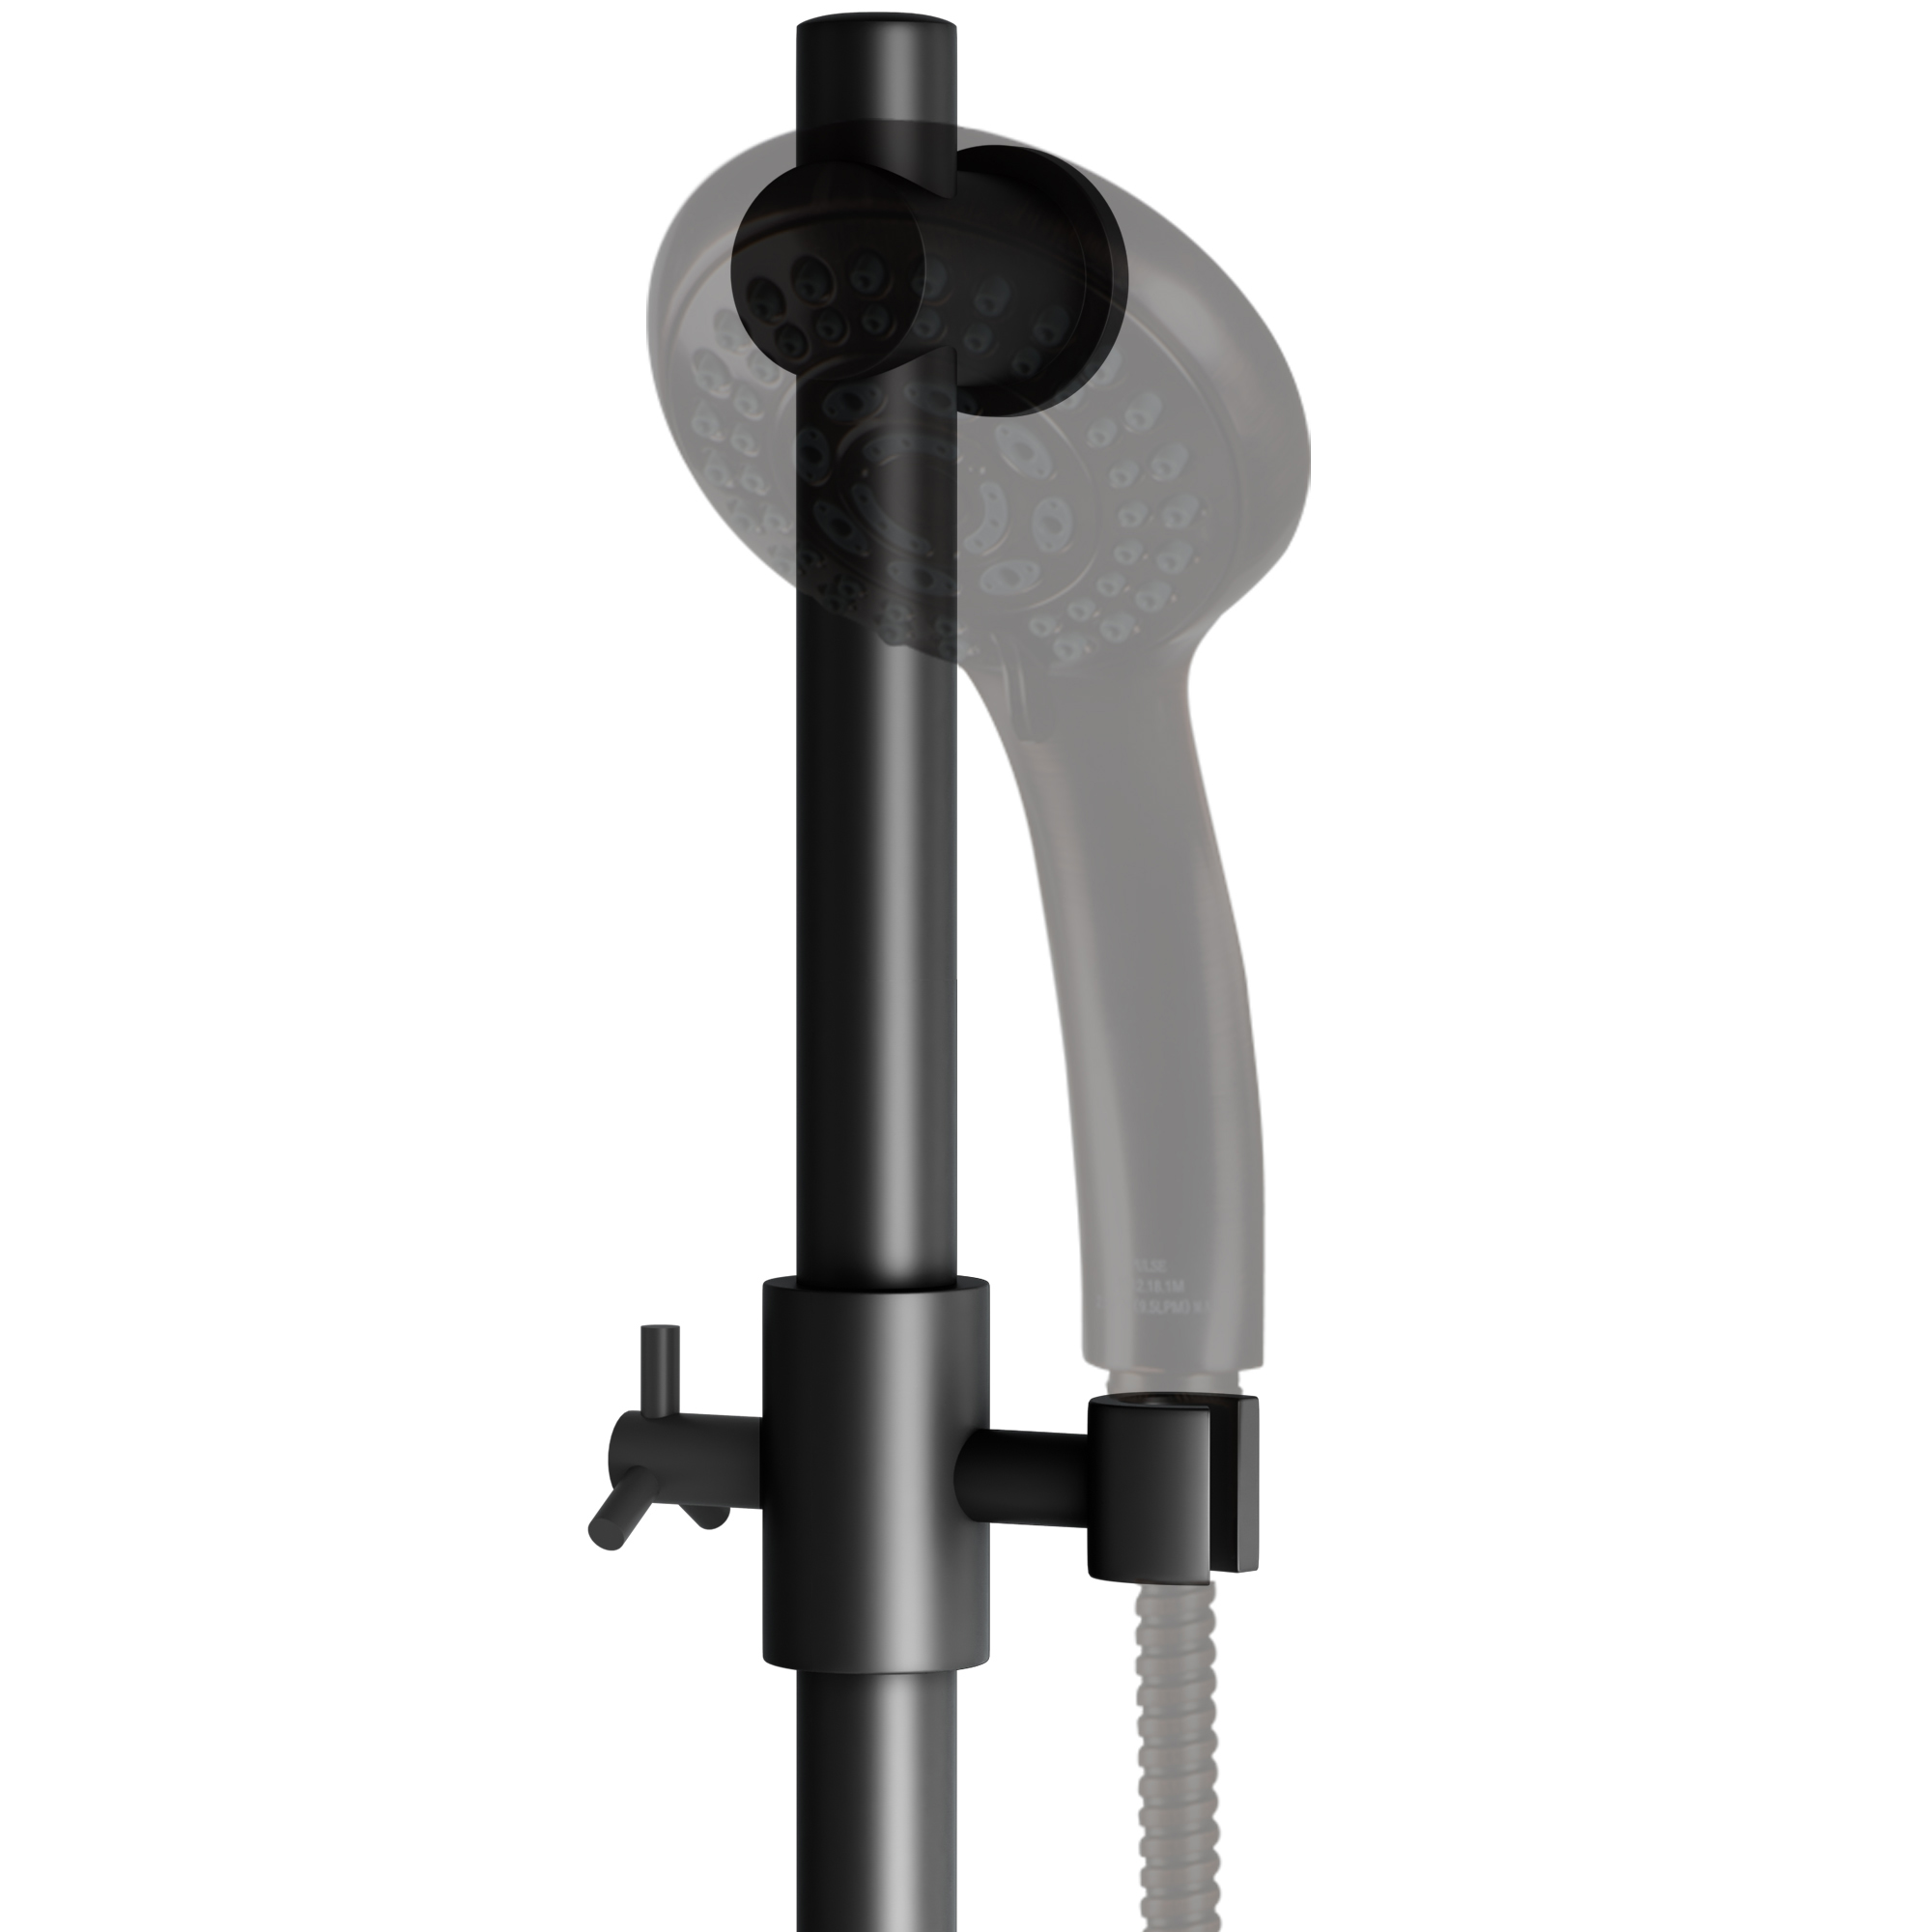 PULSE ShowerSpas 1010-ORB Adjustable Slide Bar for Hand Shower with Wire Basket Soap Dish Oil Rubbed Bronze